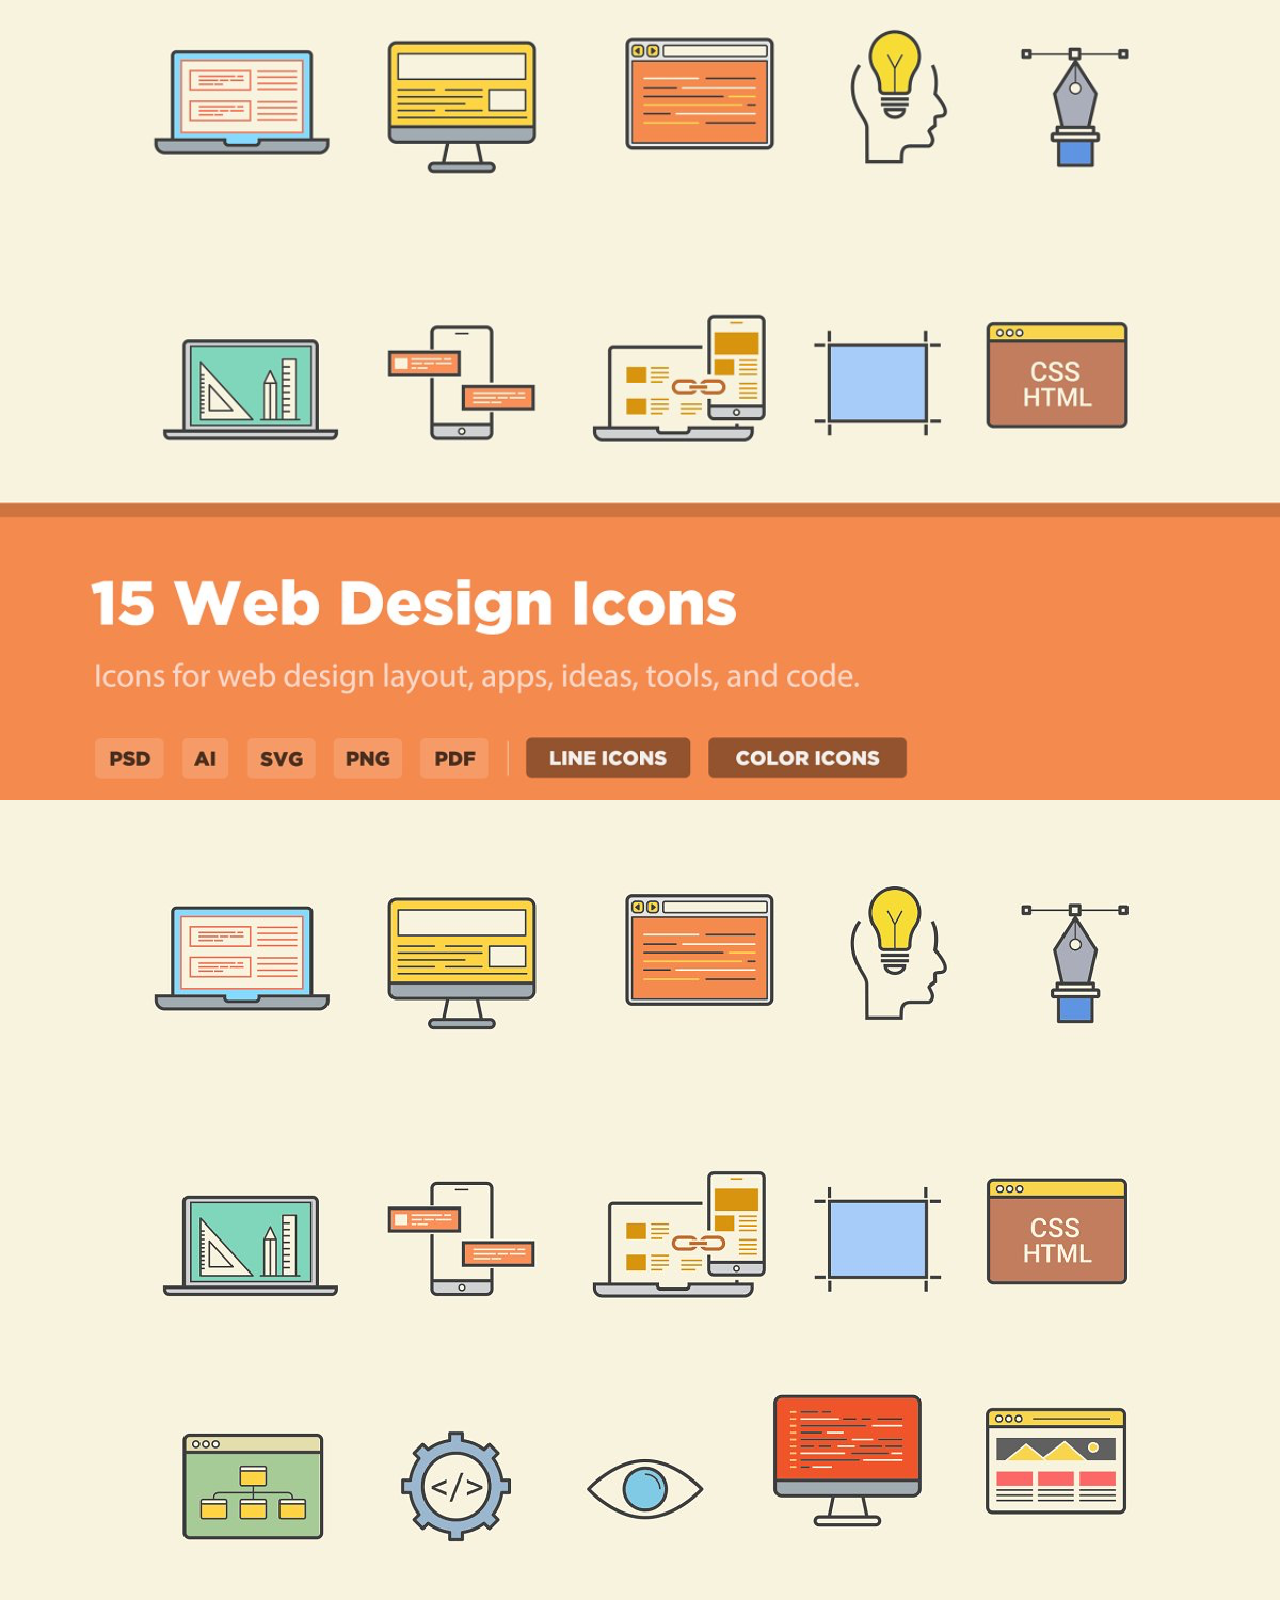 15 web design icons pinterest image.